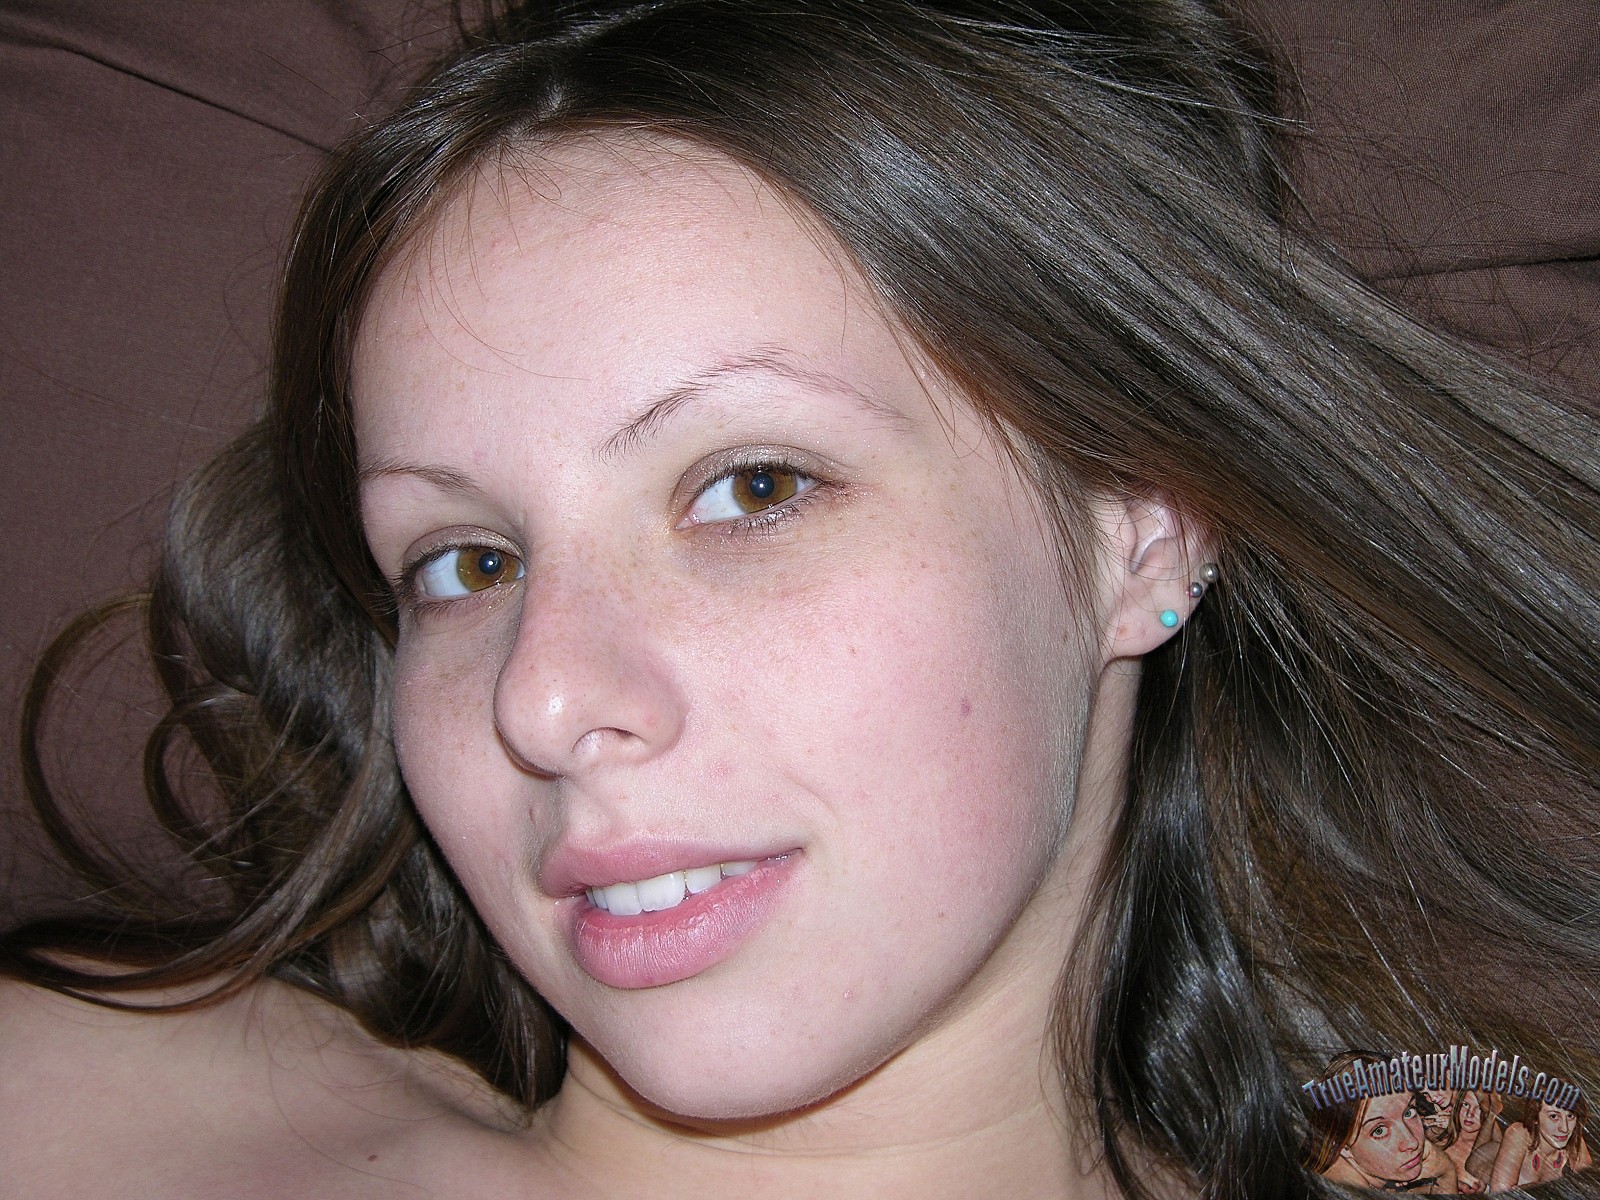 wpid-cute-19-year-old-amateur-pussy-spreader1.jpg